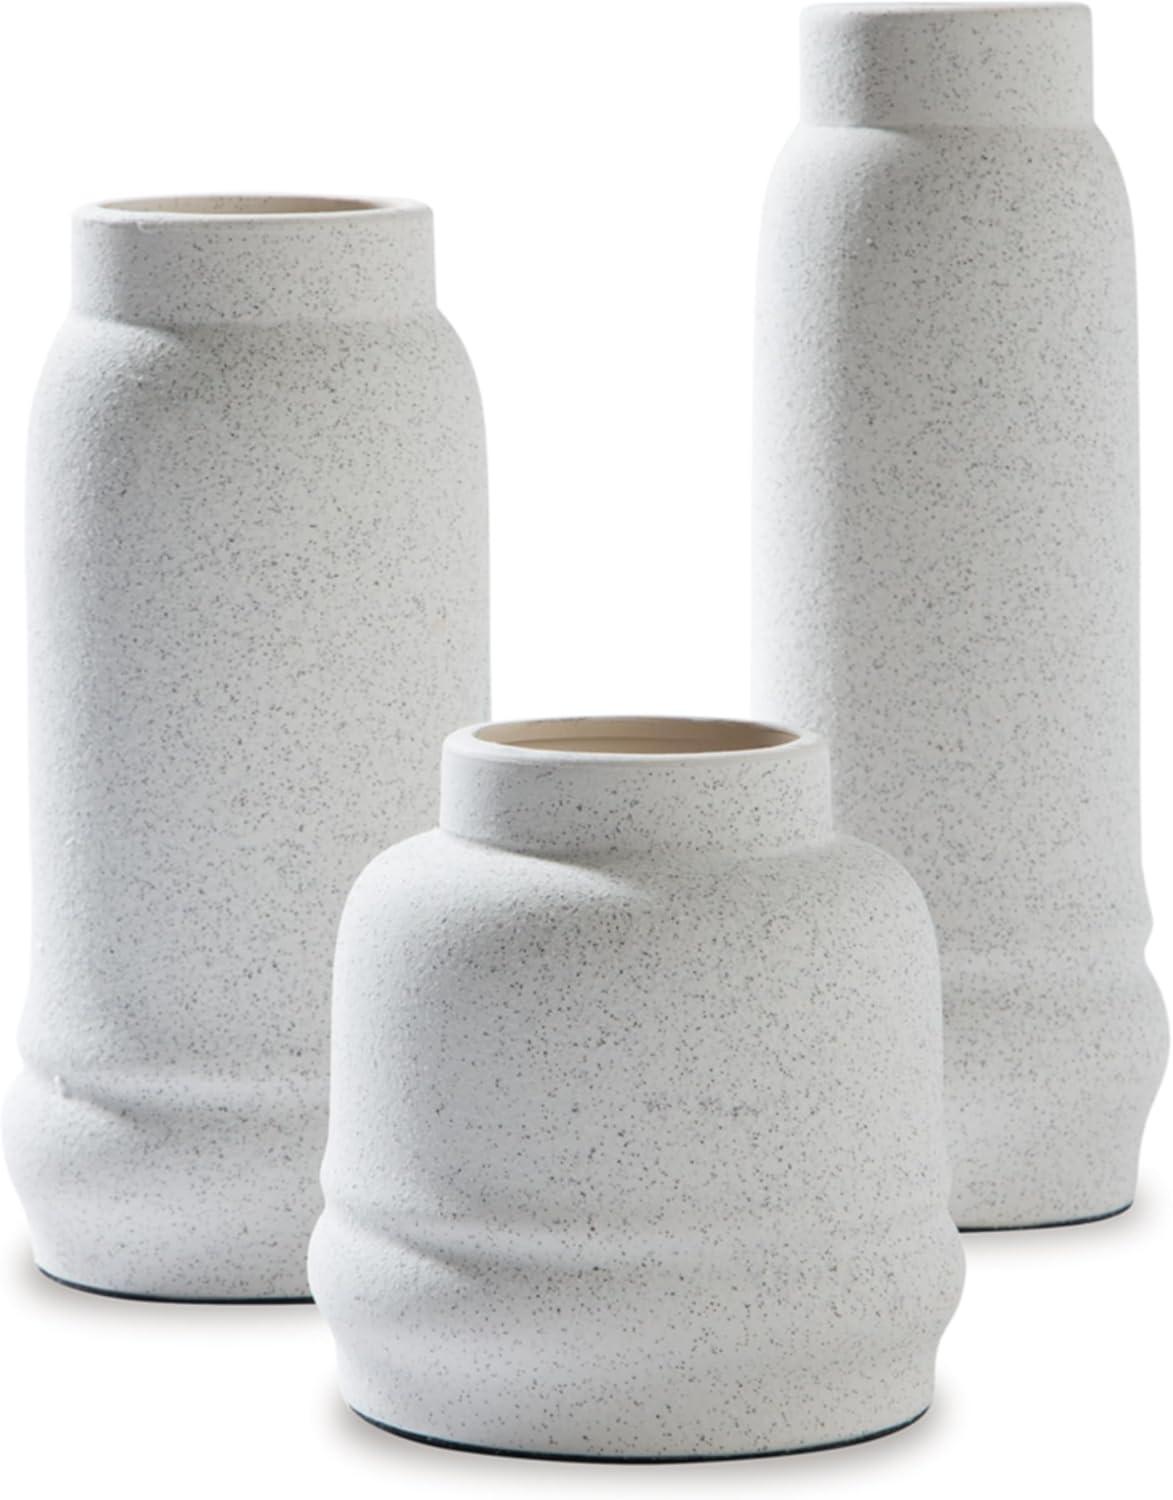 Jayden Textured White Ceramic Table Vase Trio